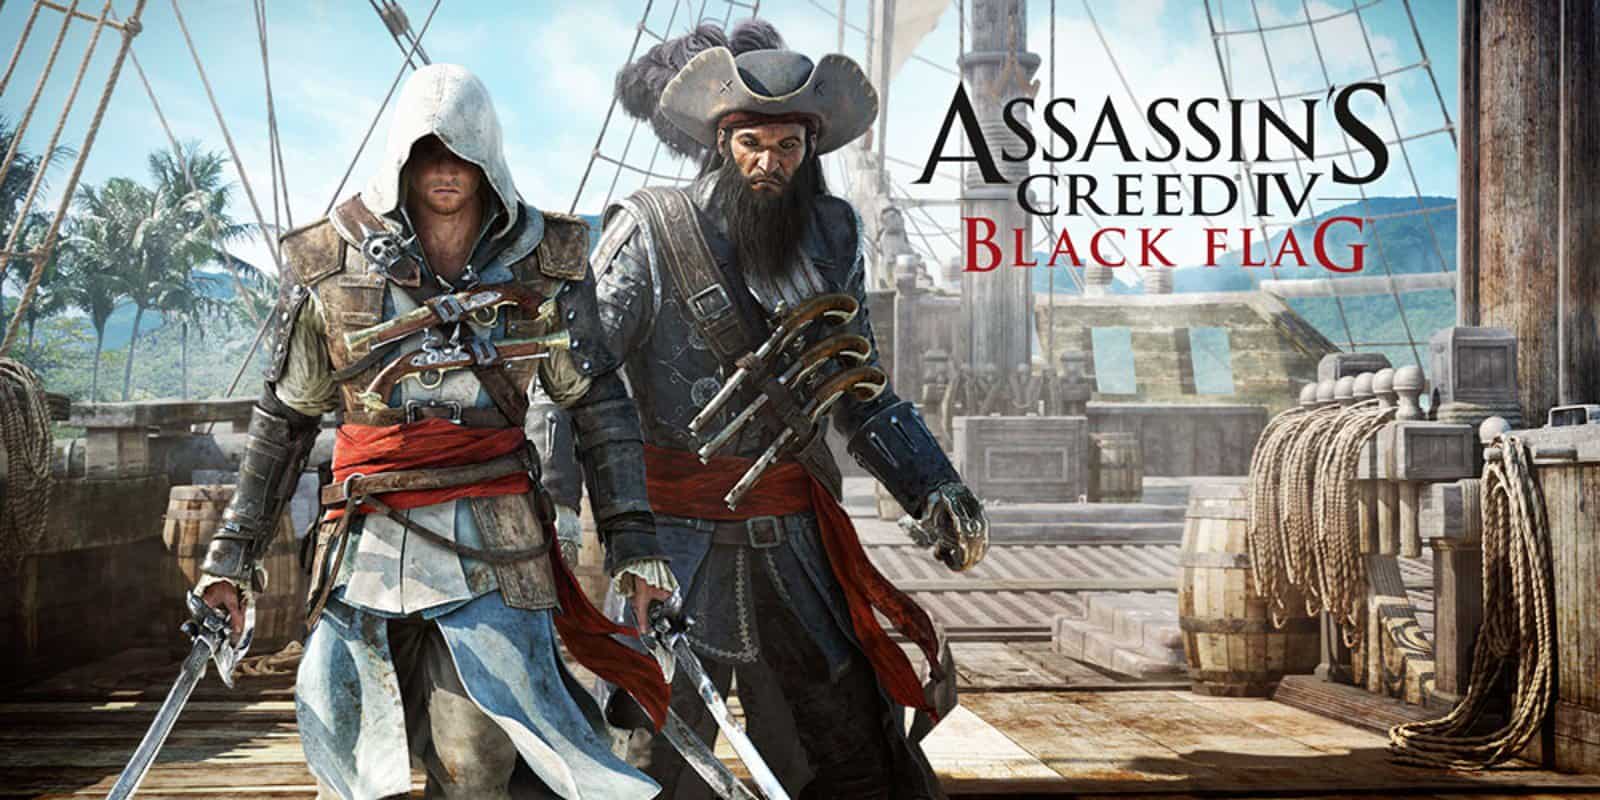 assasins creed 4 black flag pc game download 1